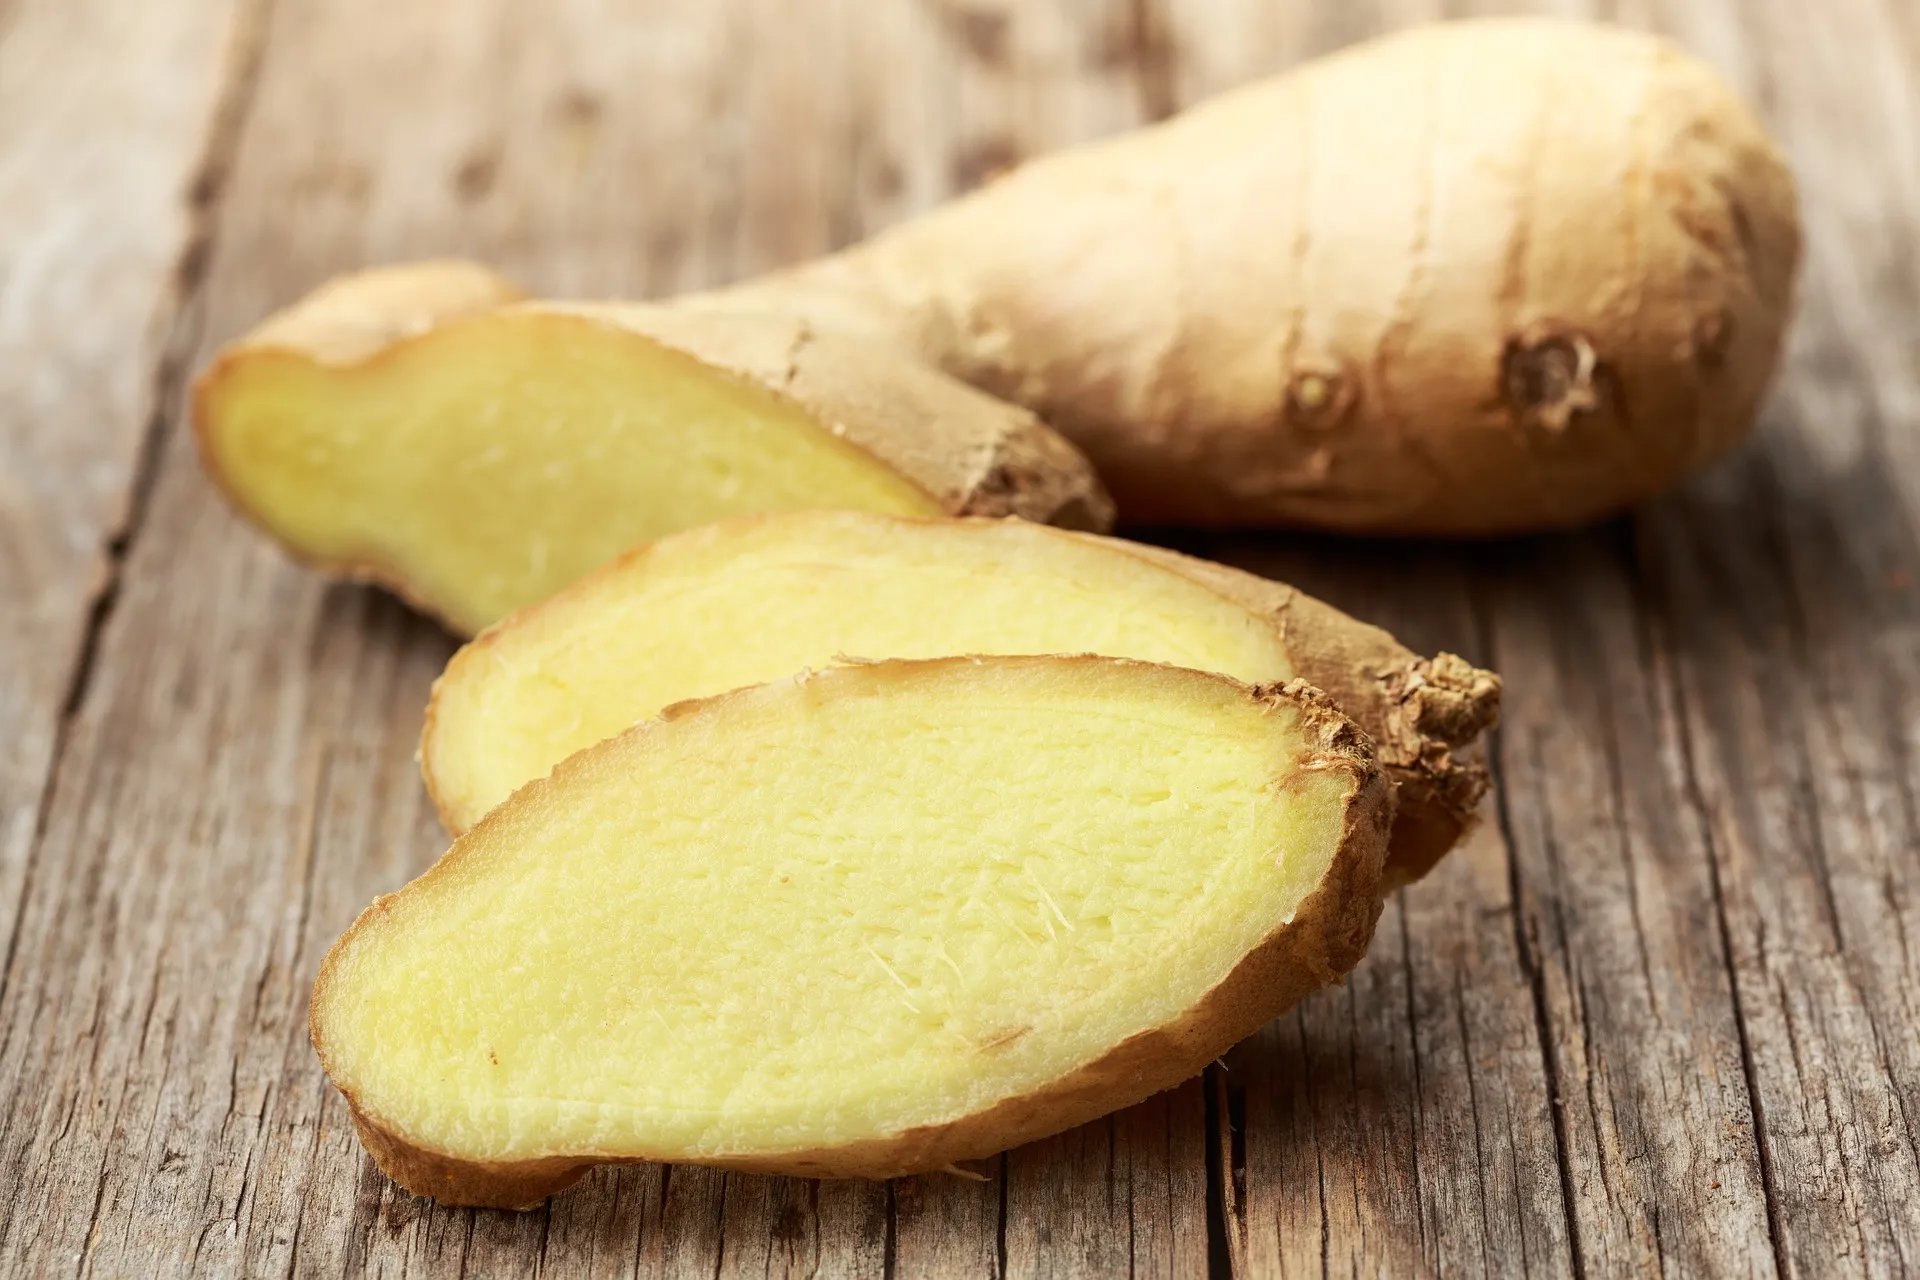 Ginger root has anti-inflammatory properties.